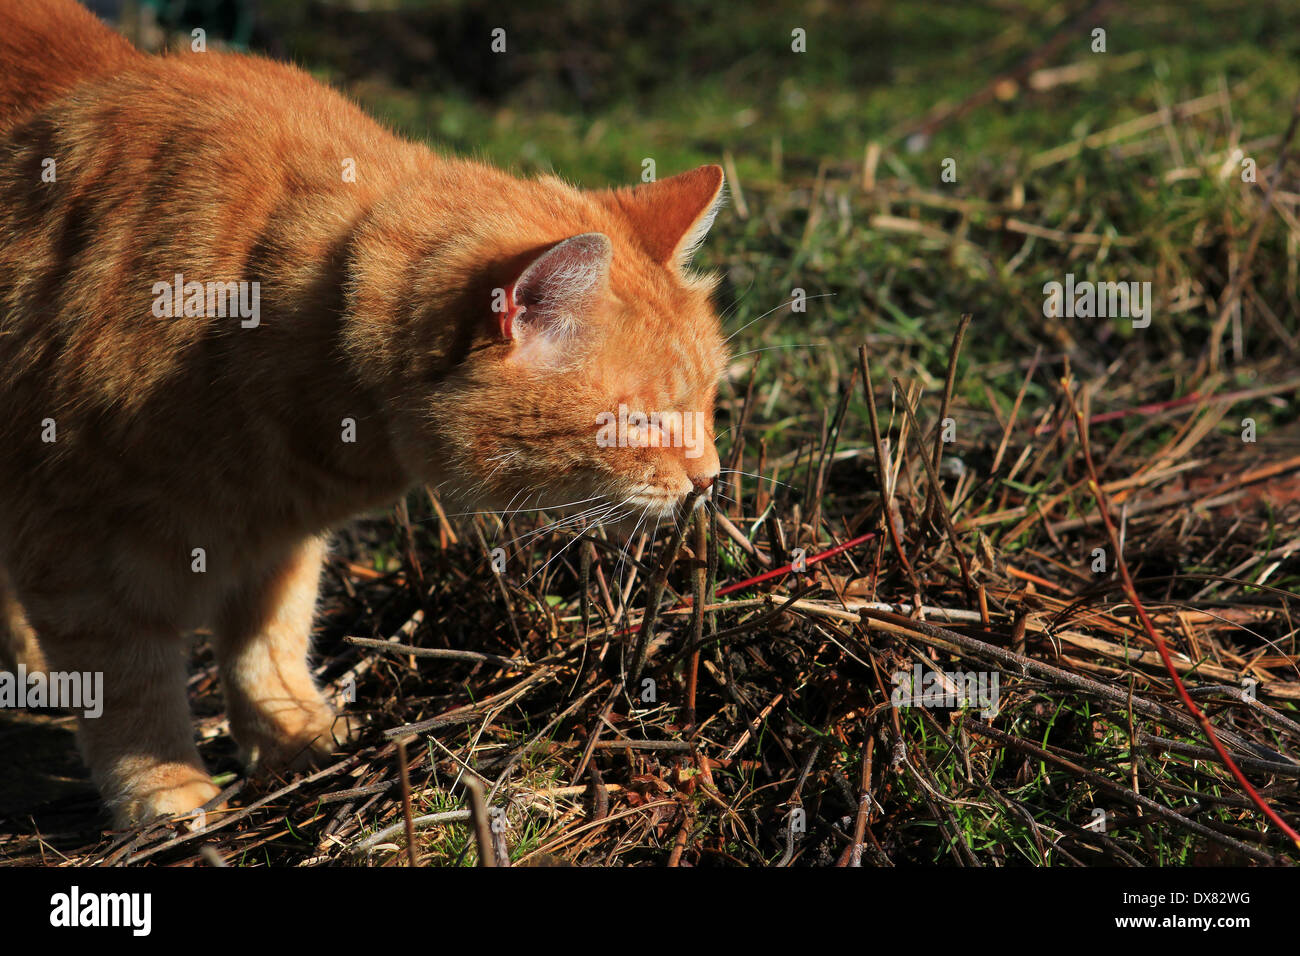 Ginger cat smelling plant stalk Stock Photo